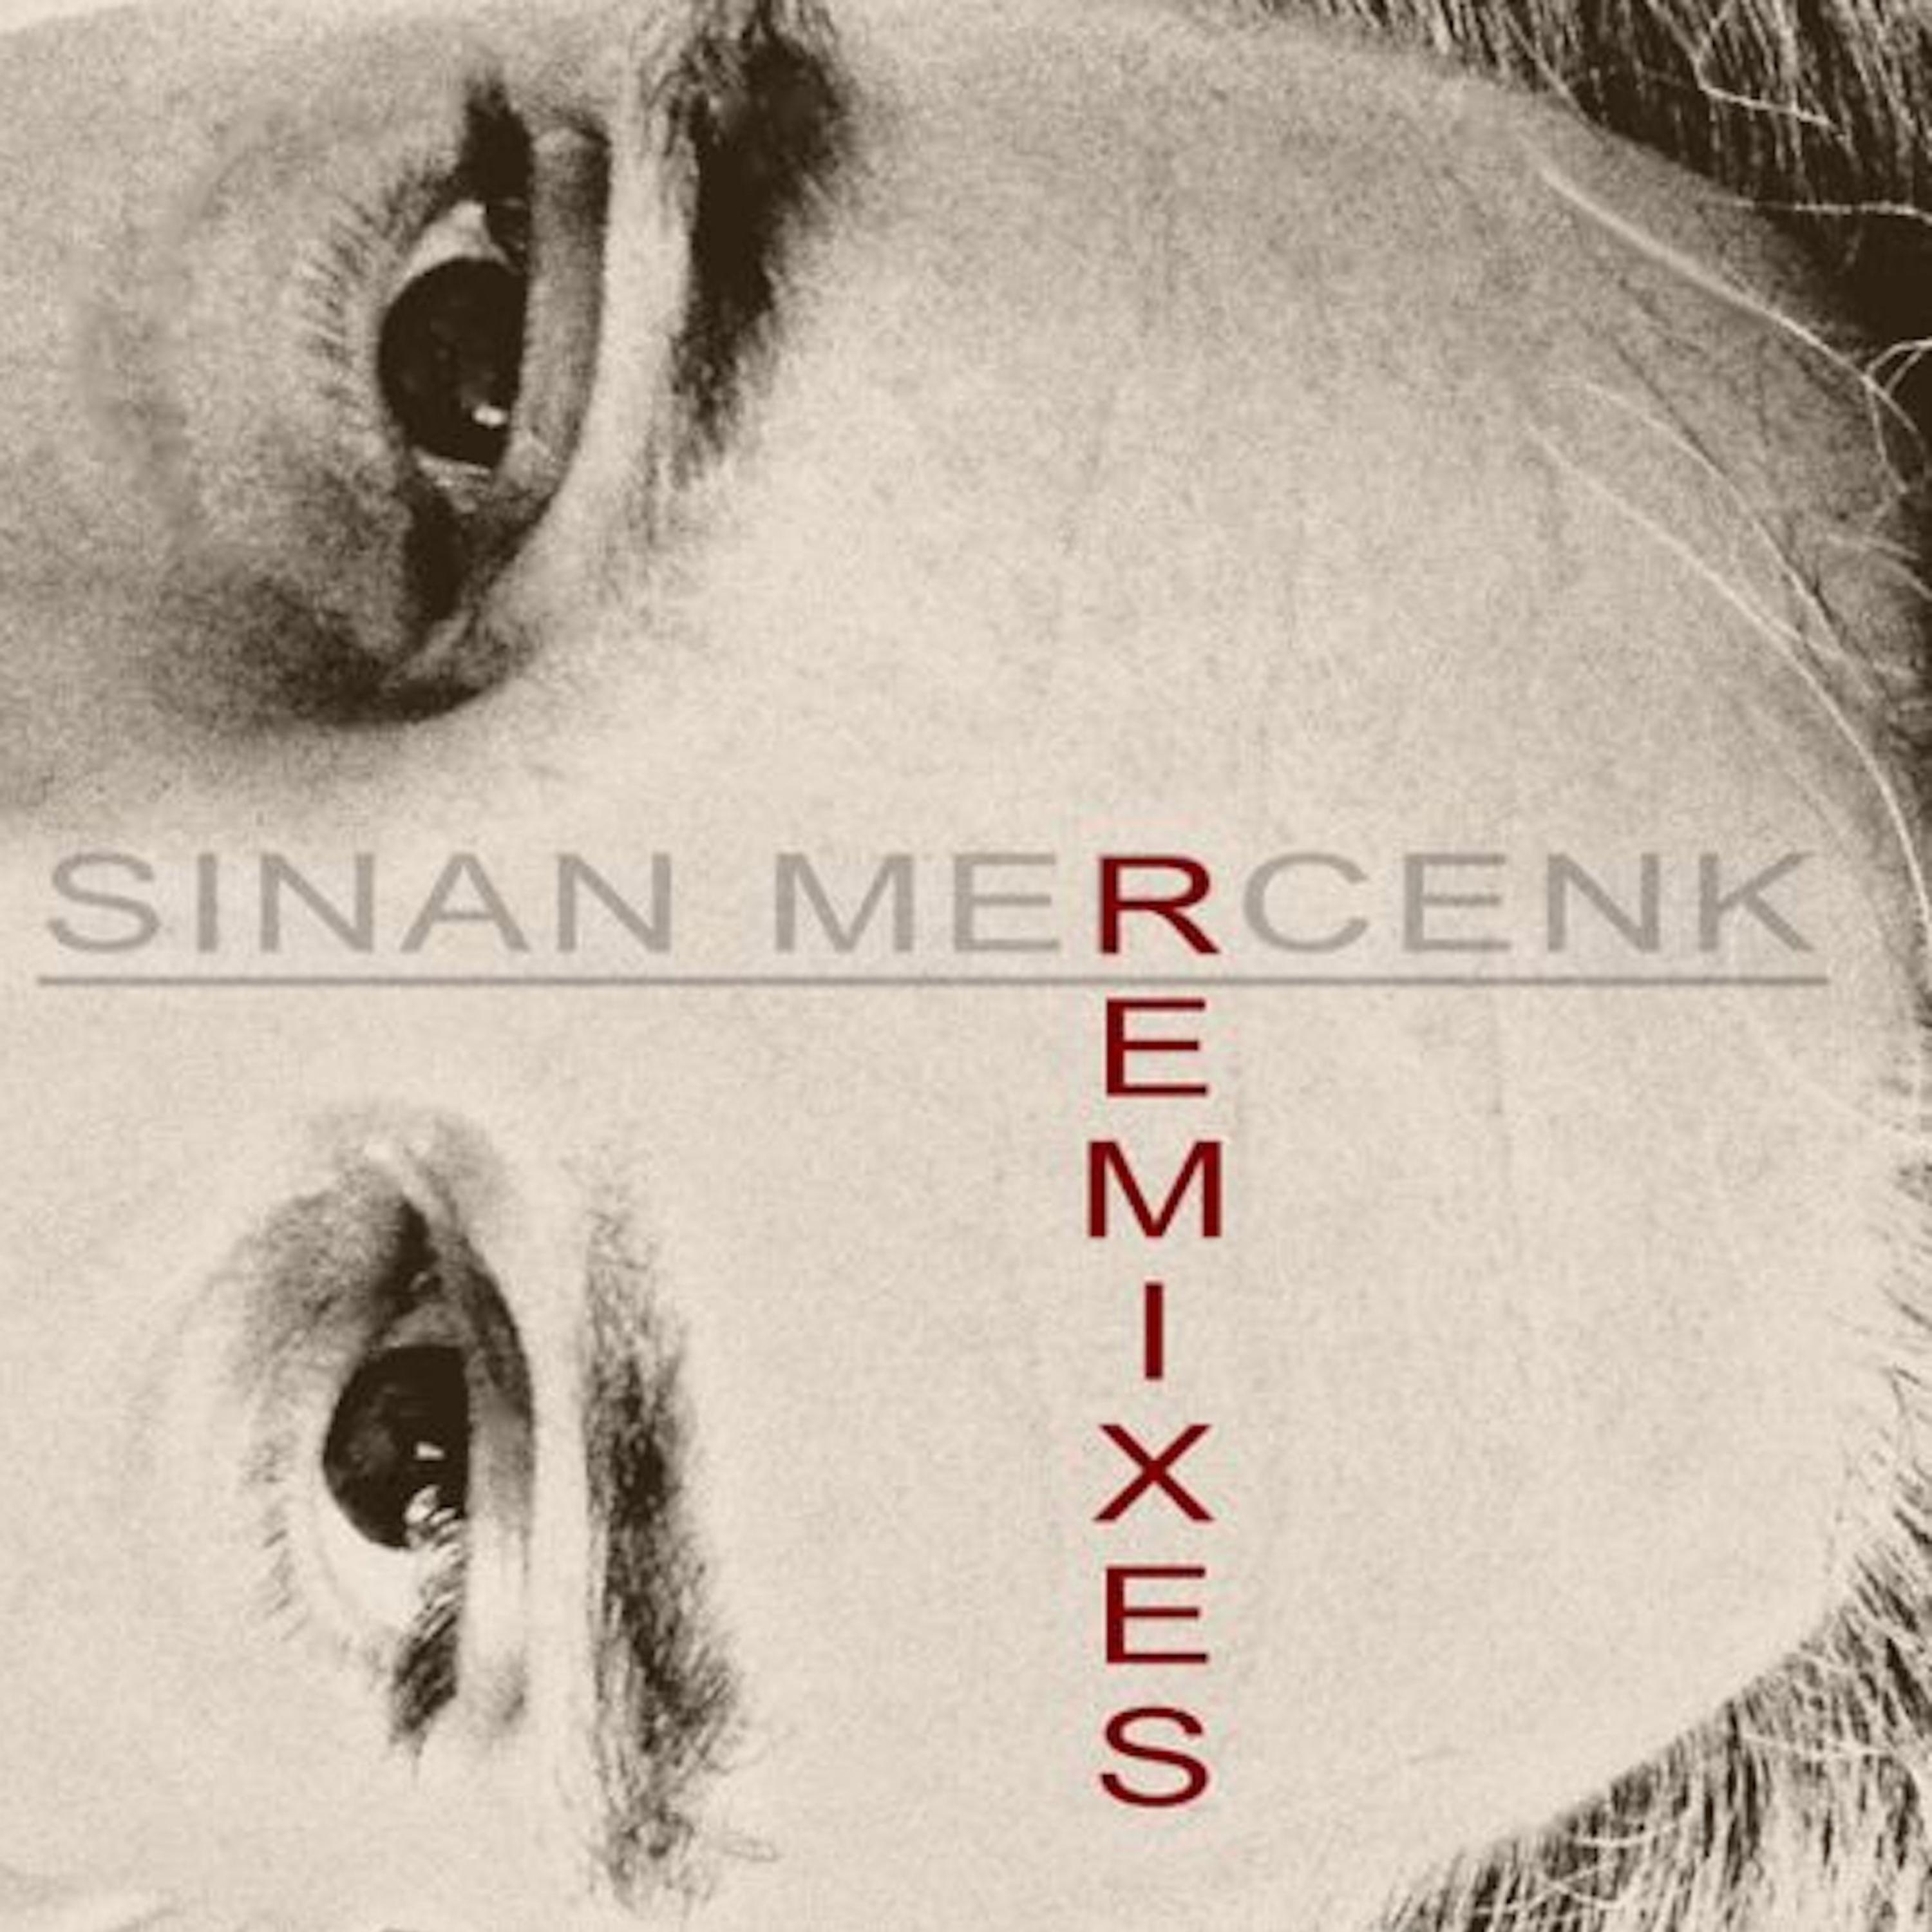 Hypnotized (Sinan Mercenk's Remix Pt. I)